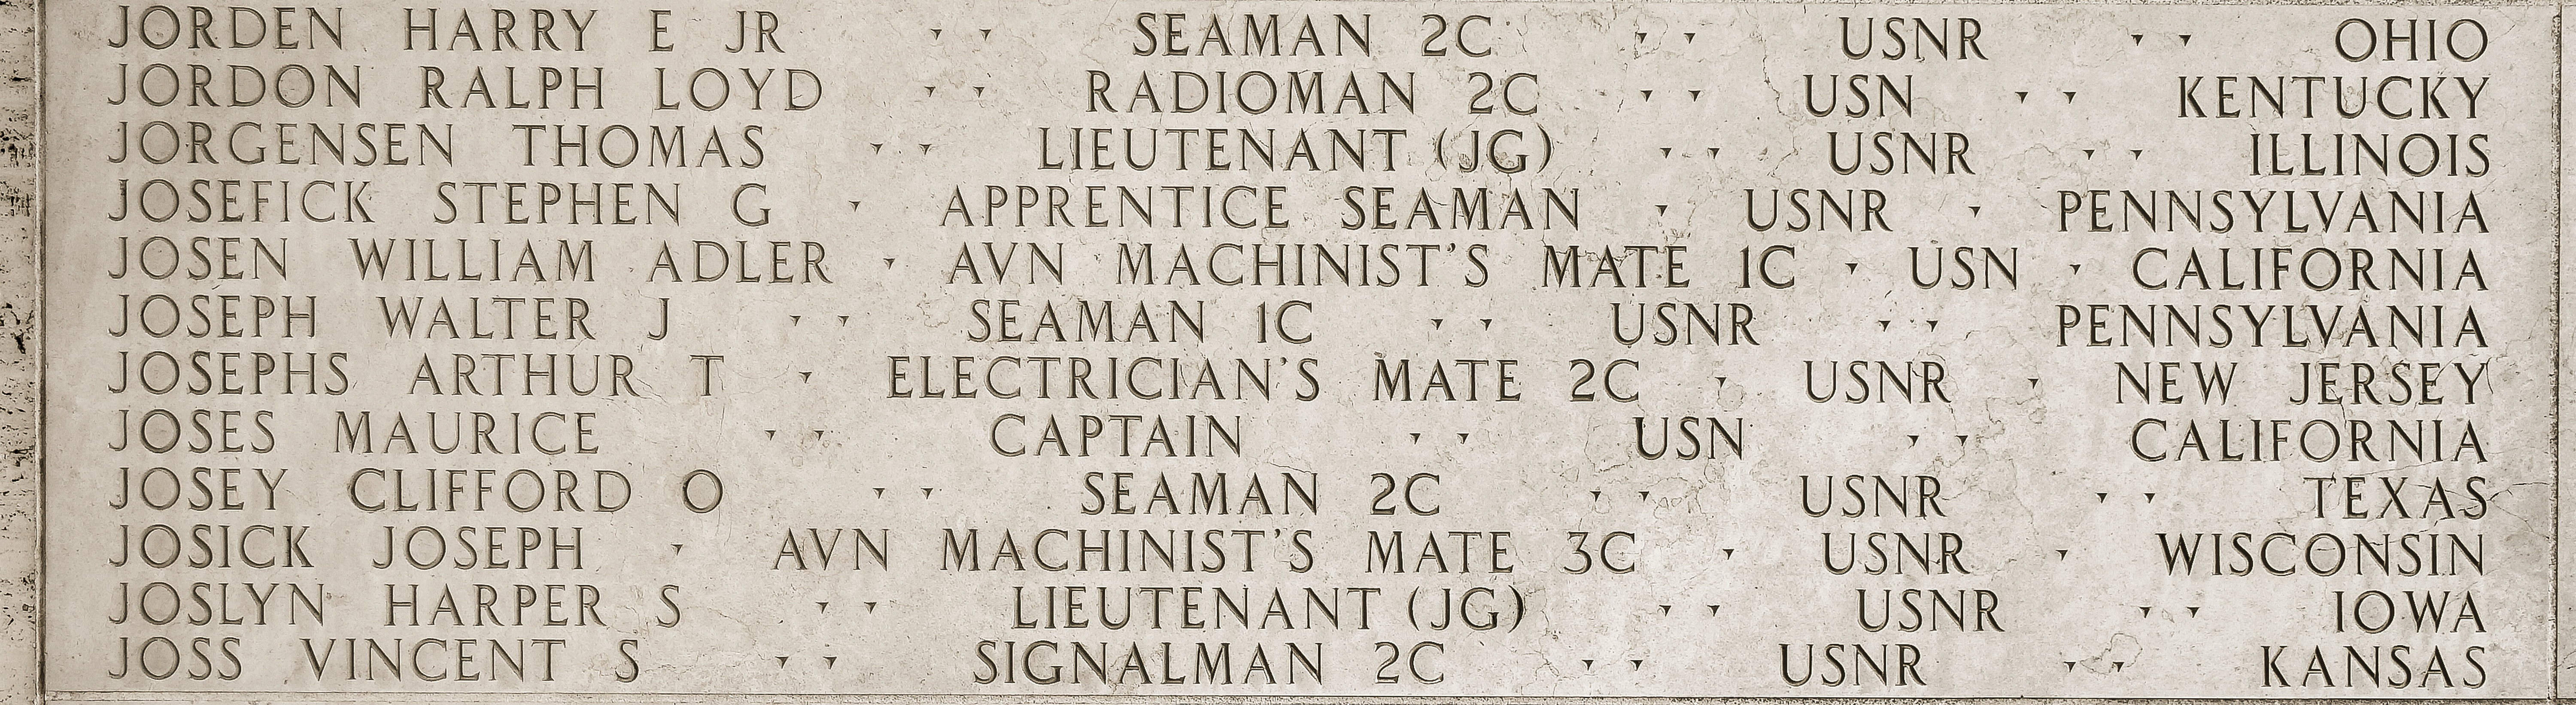 Stephen G. Josefick, Apprentice Seaman